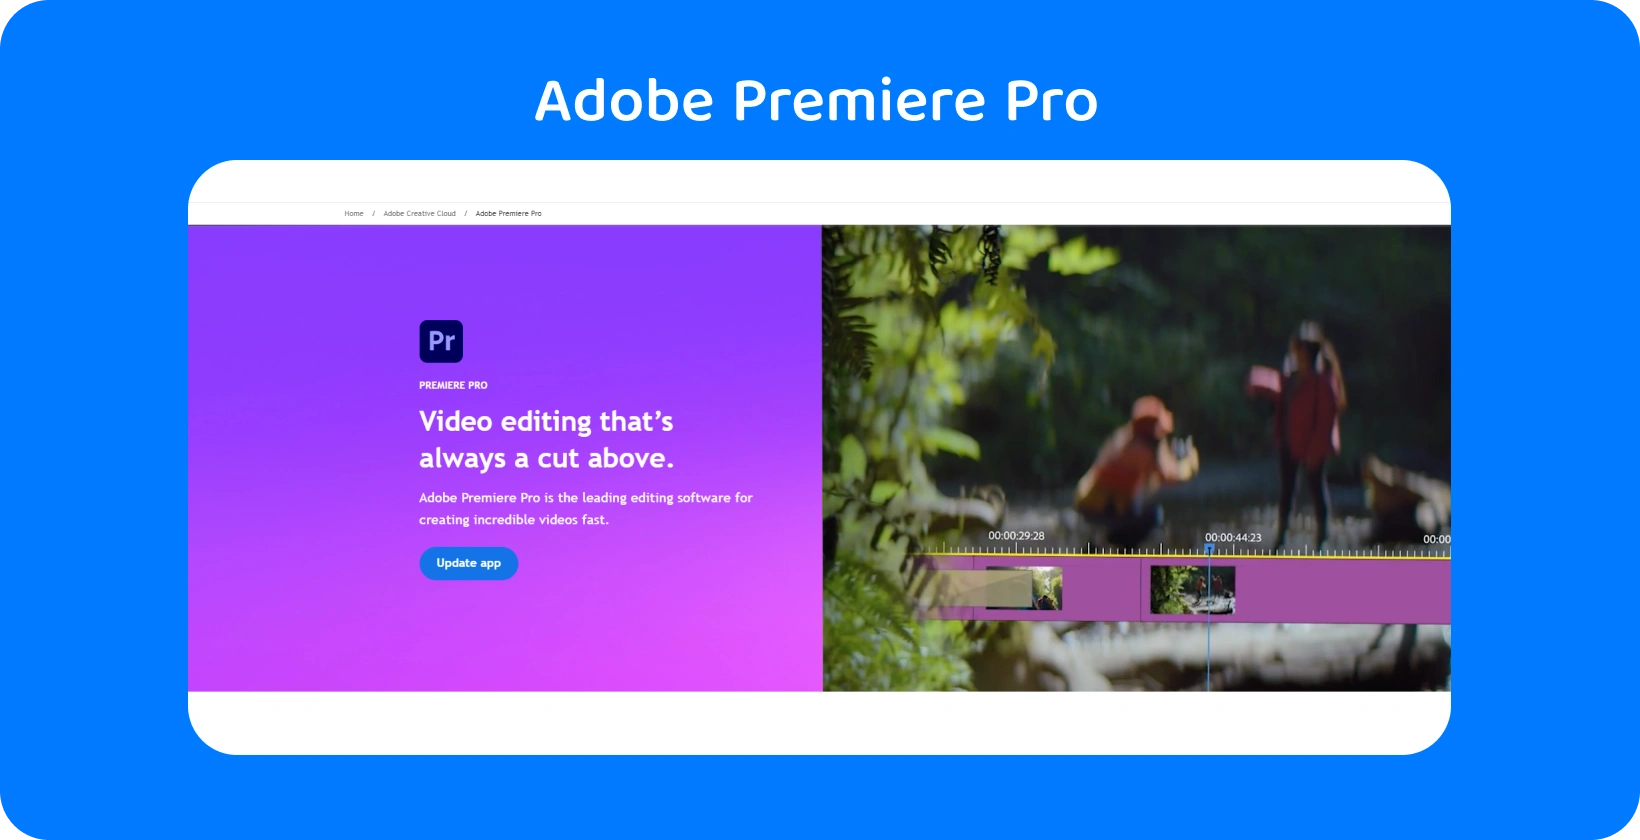 Adobe Premiere Pro διεπαφή που εμφανίζει τις προηγμένες δυνατότητες επεξεργασίας βίντεο, ιδανική για γρήγορες, ακριβείς επεξεργασίες.